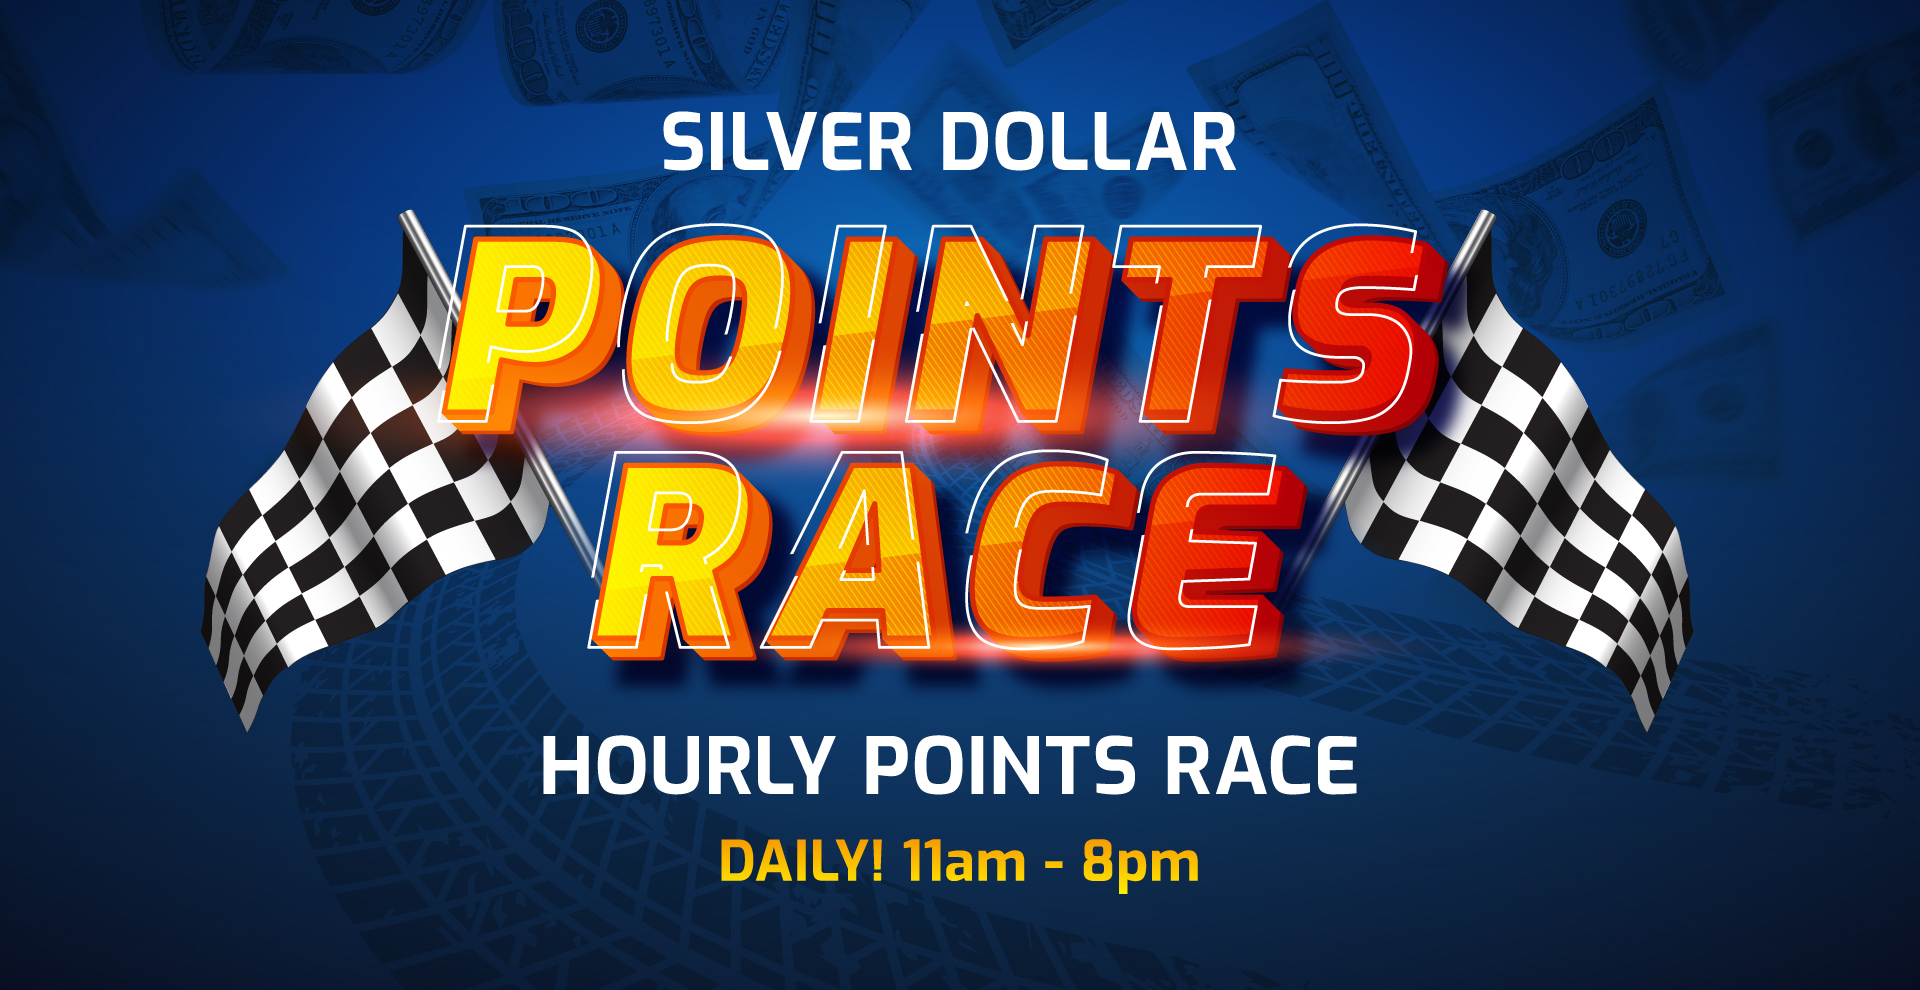 Silver Dollar Casino Seatac | Silver Dollar Points Race